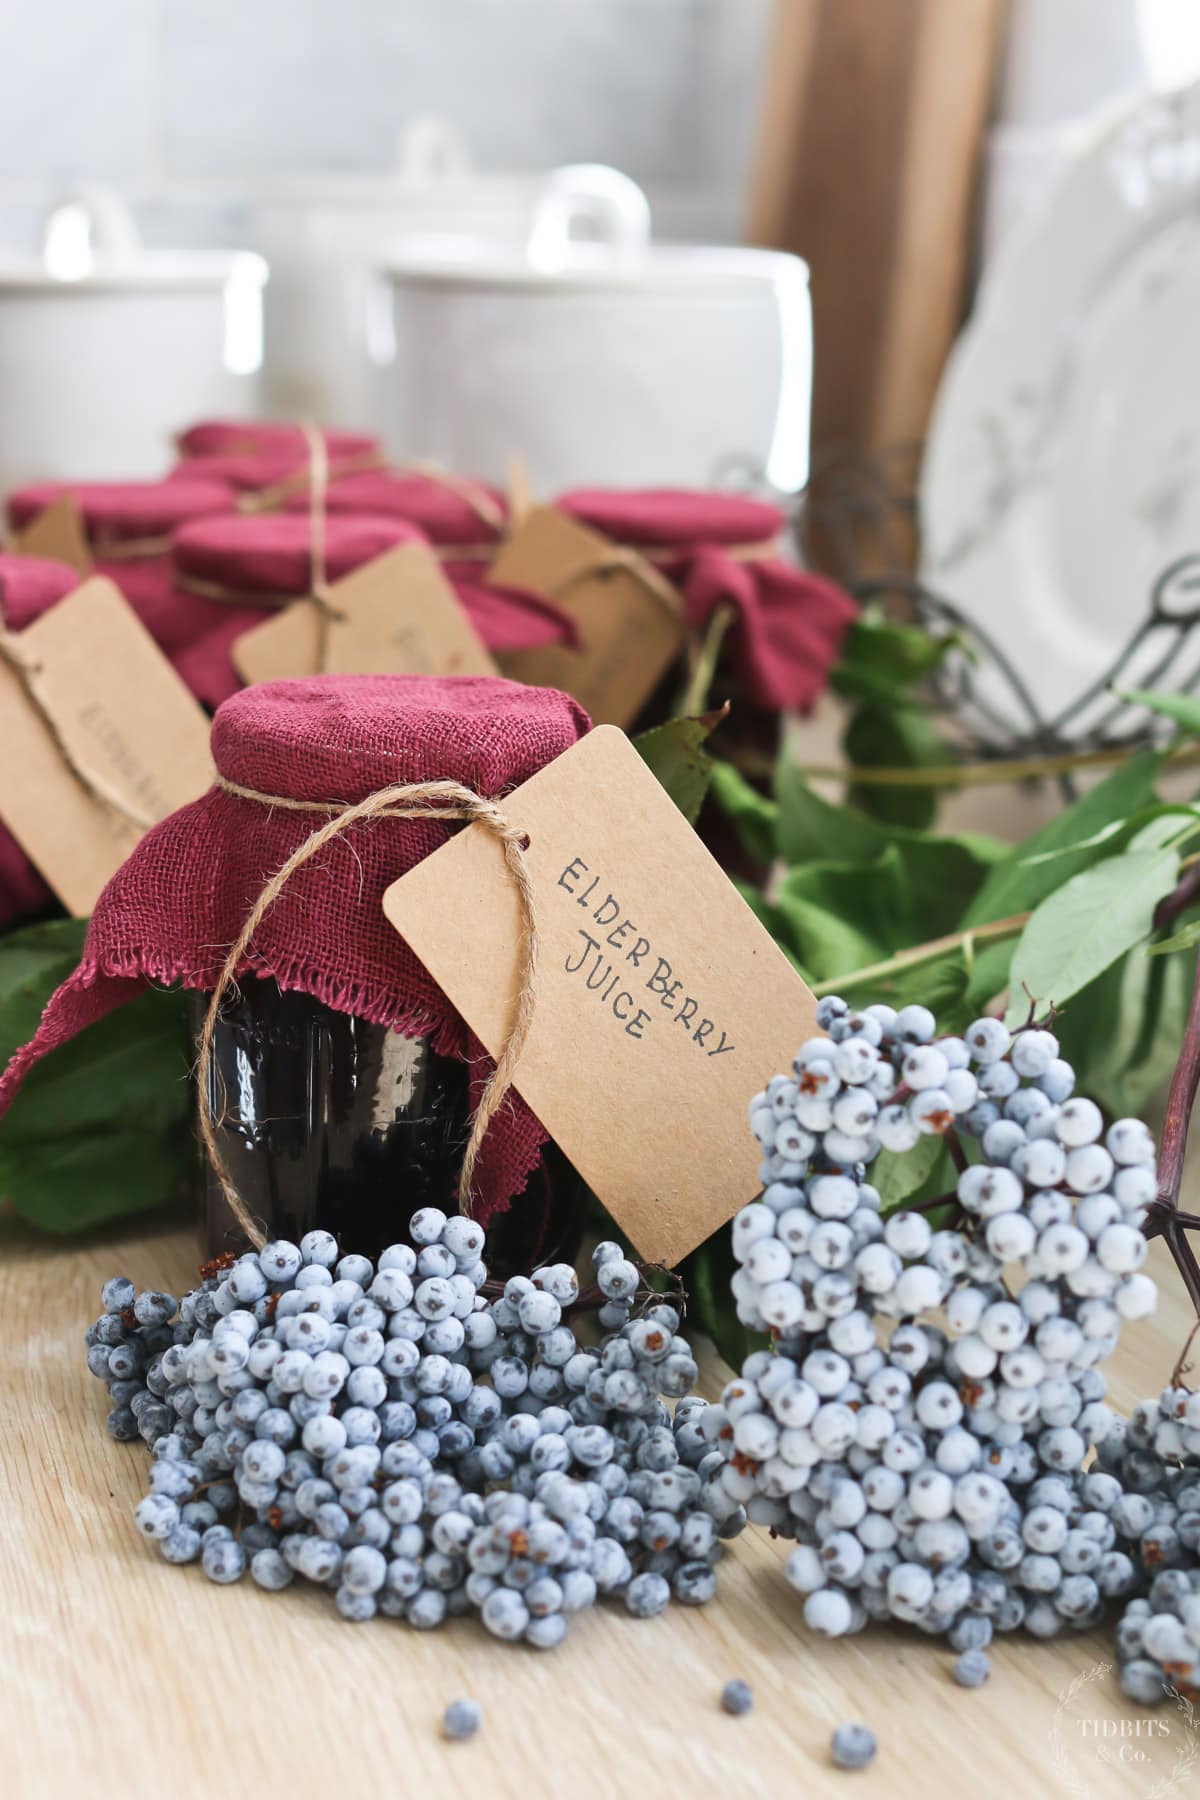 A bundle of fresh elderberries and bottles of elderberry juice with brown labels